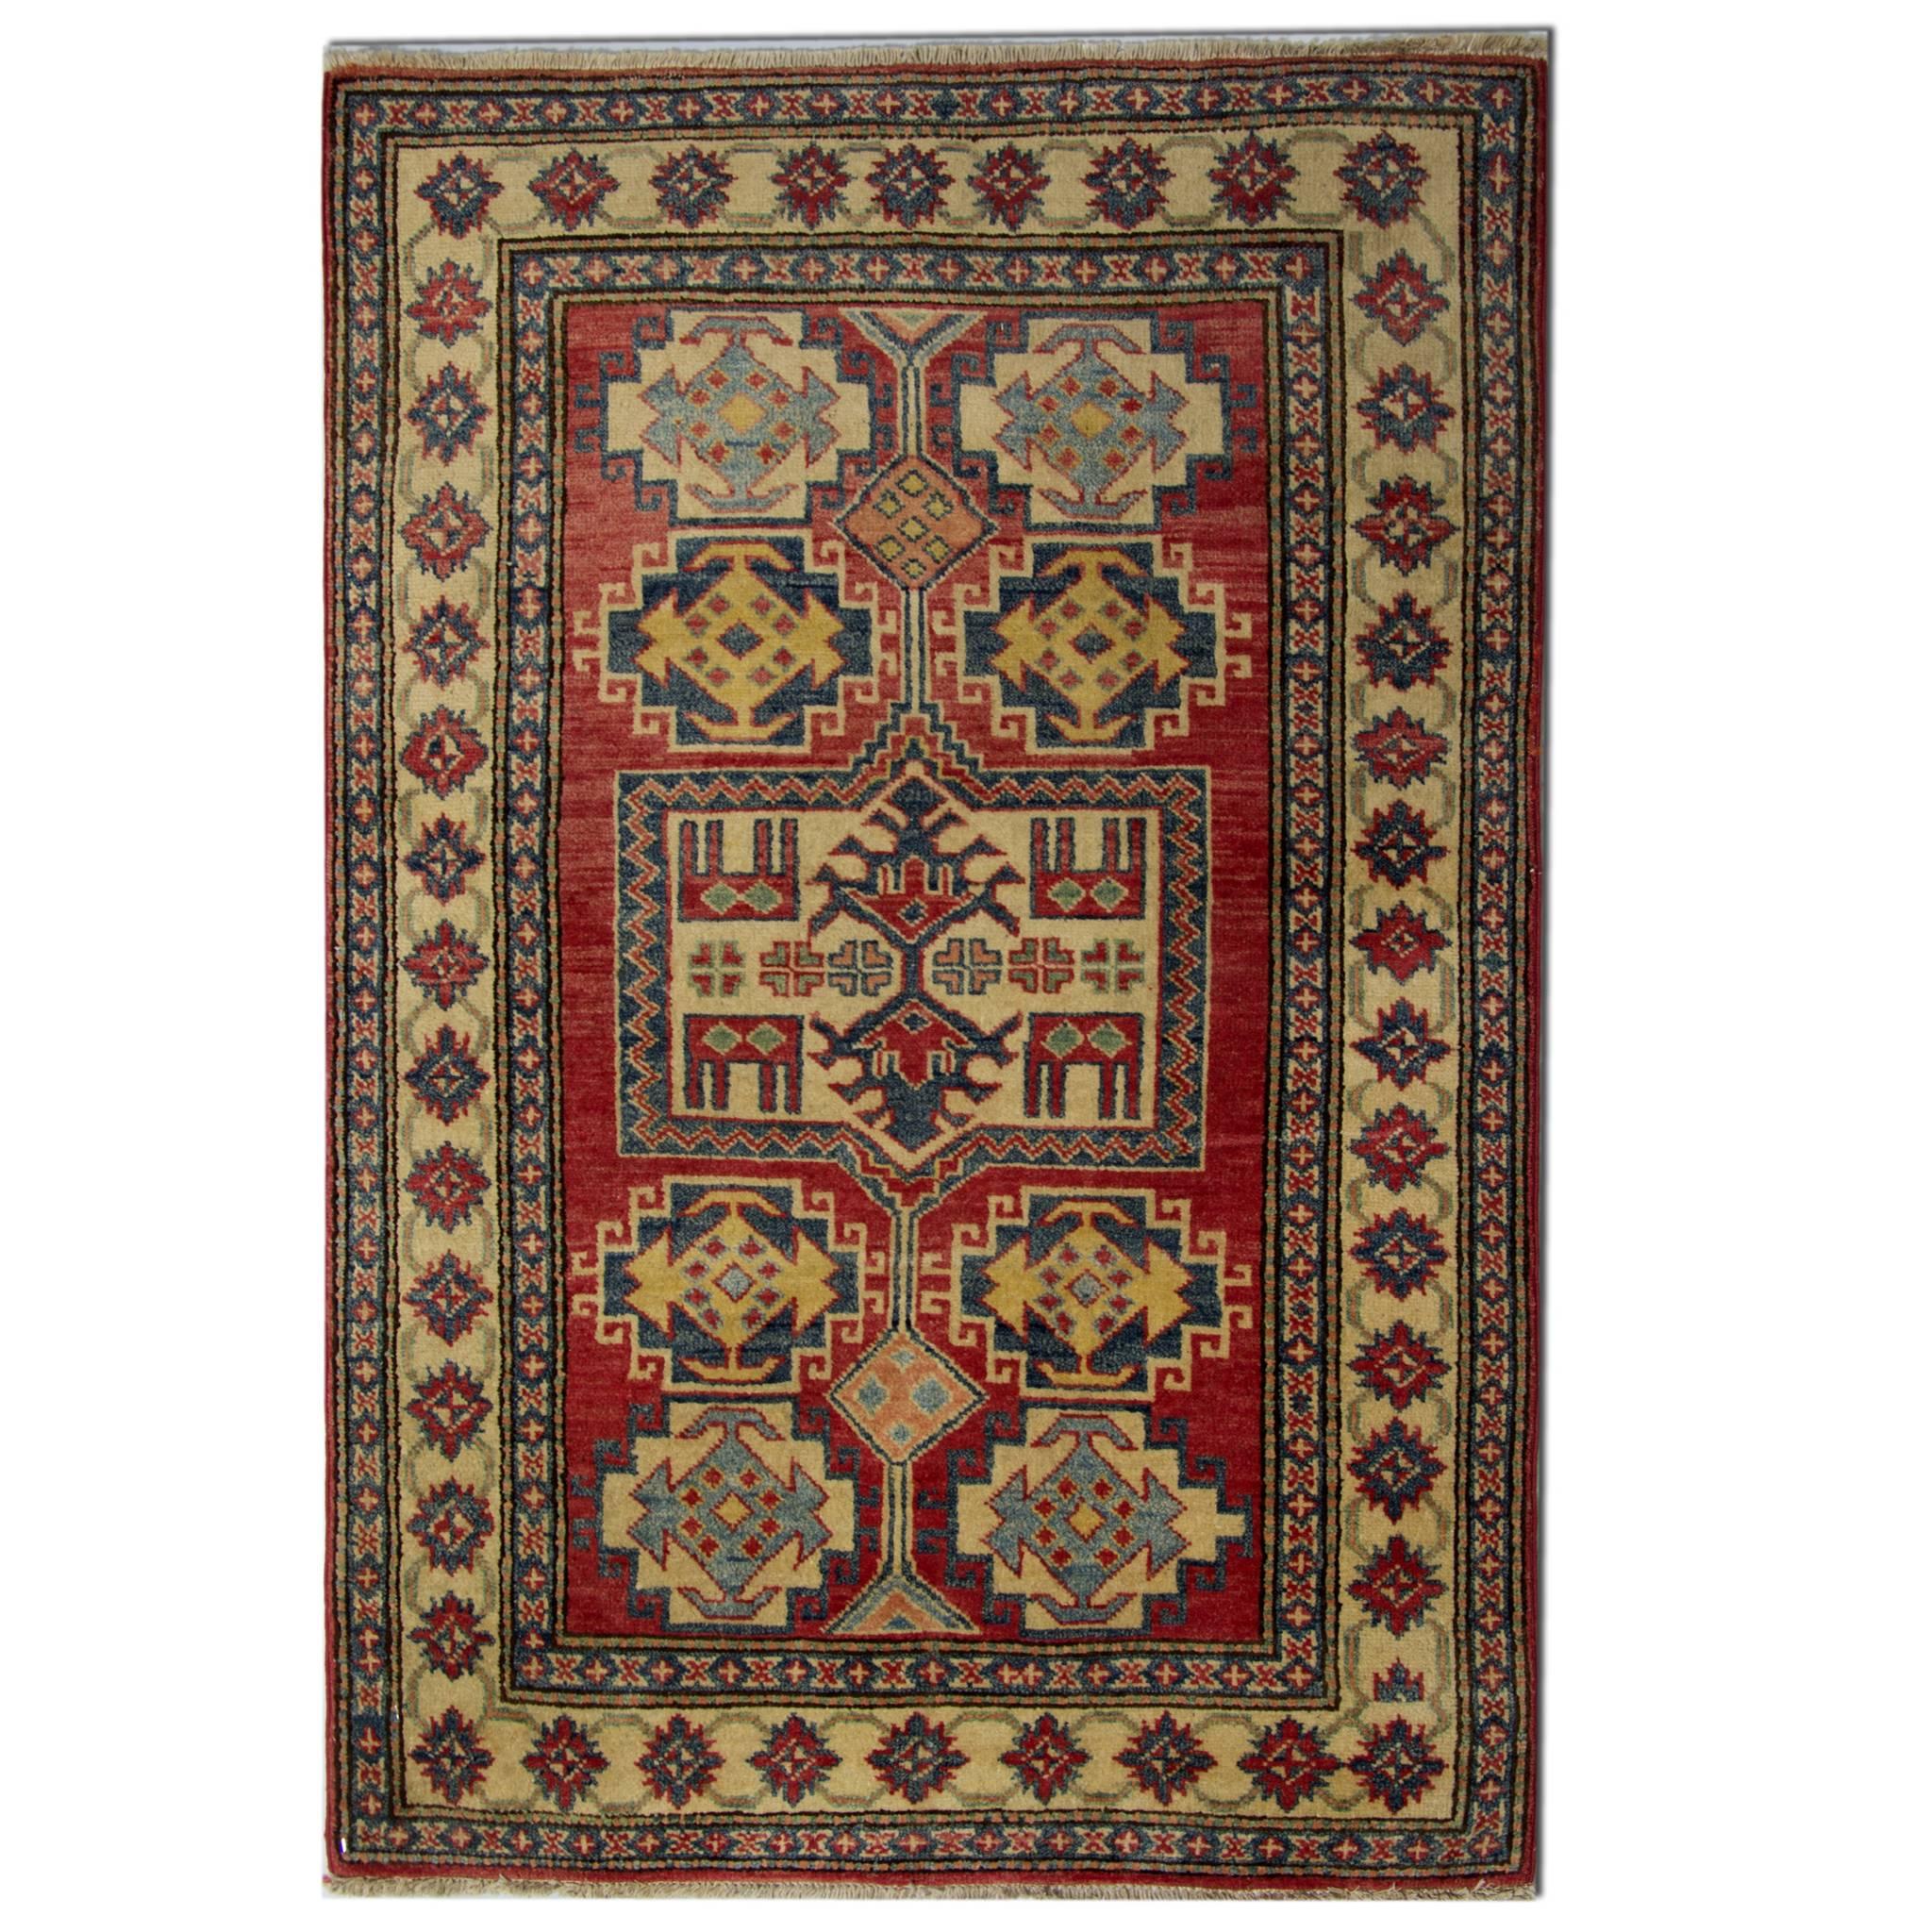 Pretty old Antique hand made afghan war rug size 182 cm x 130 cm